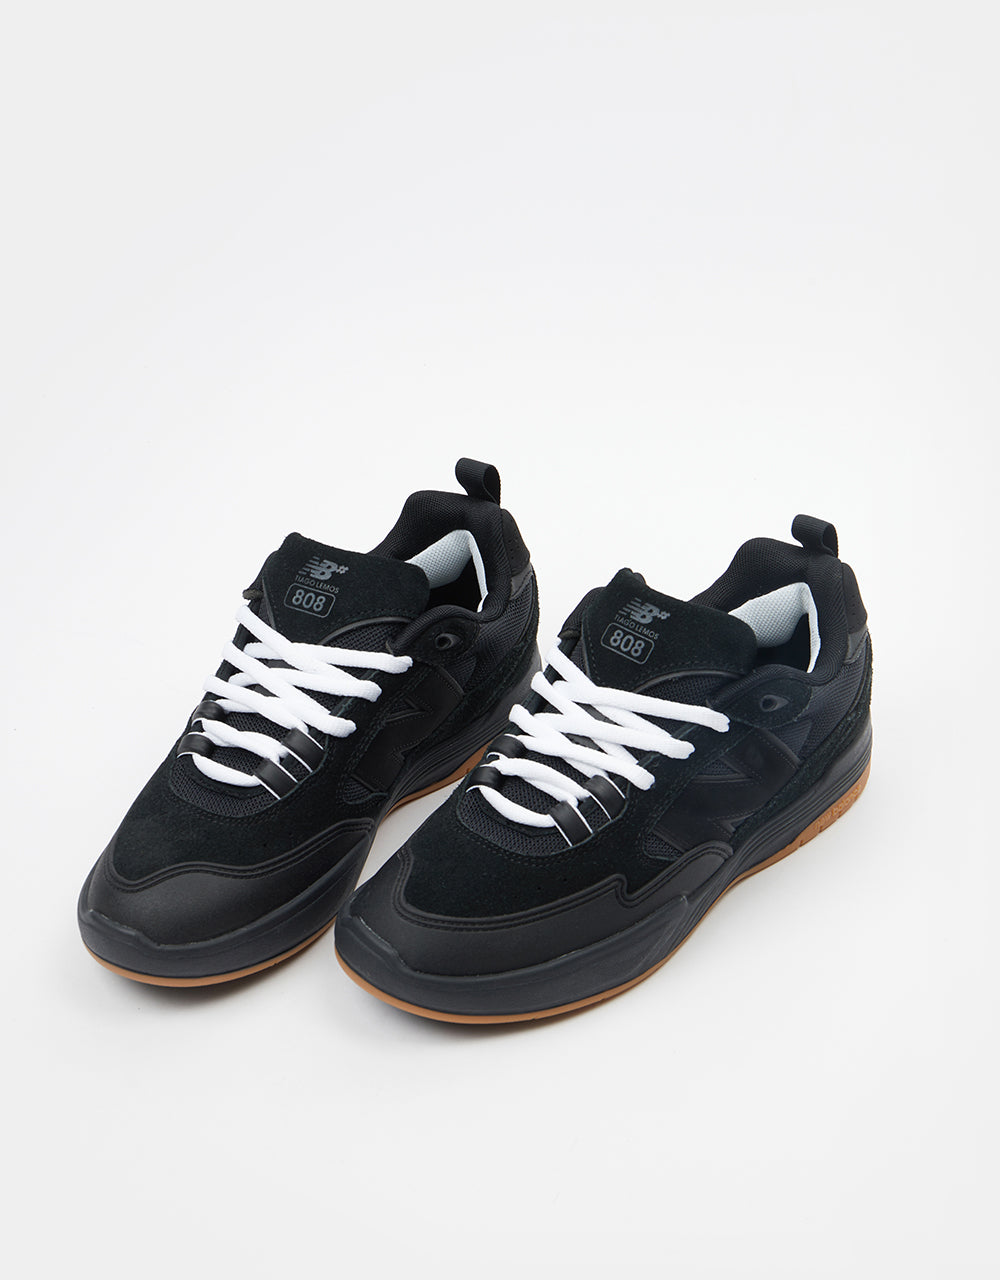 New Balance Numeric 808 Skate Shoes - Black/Gum